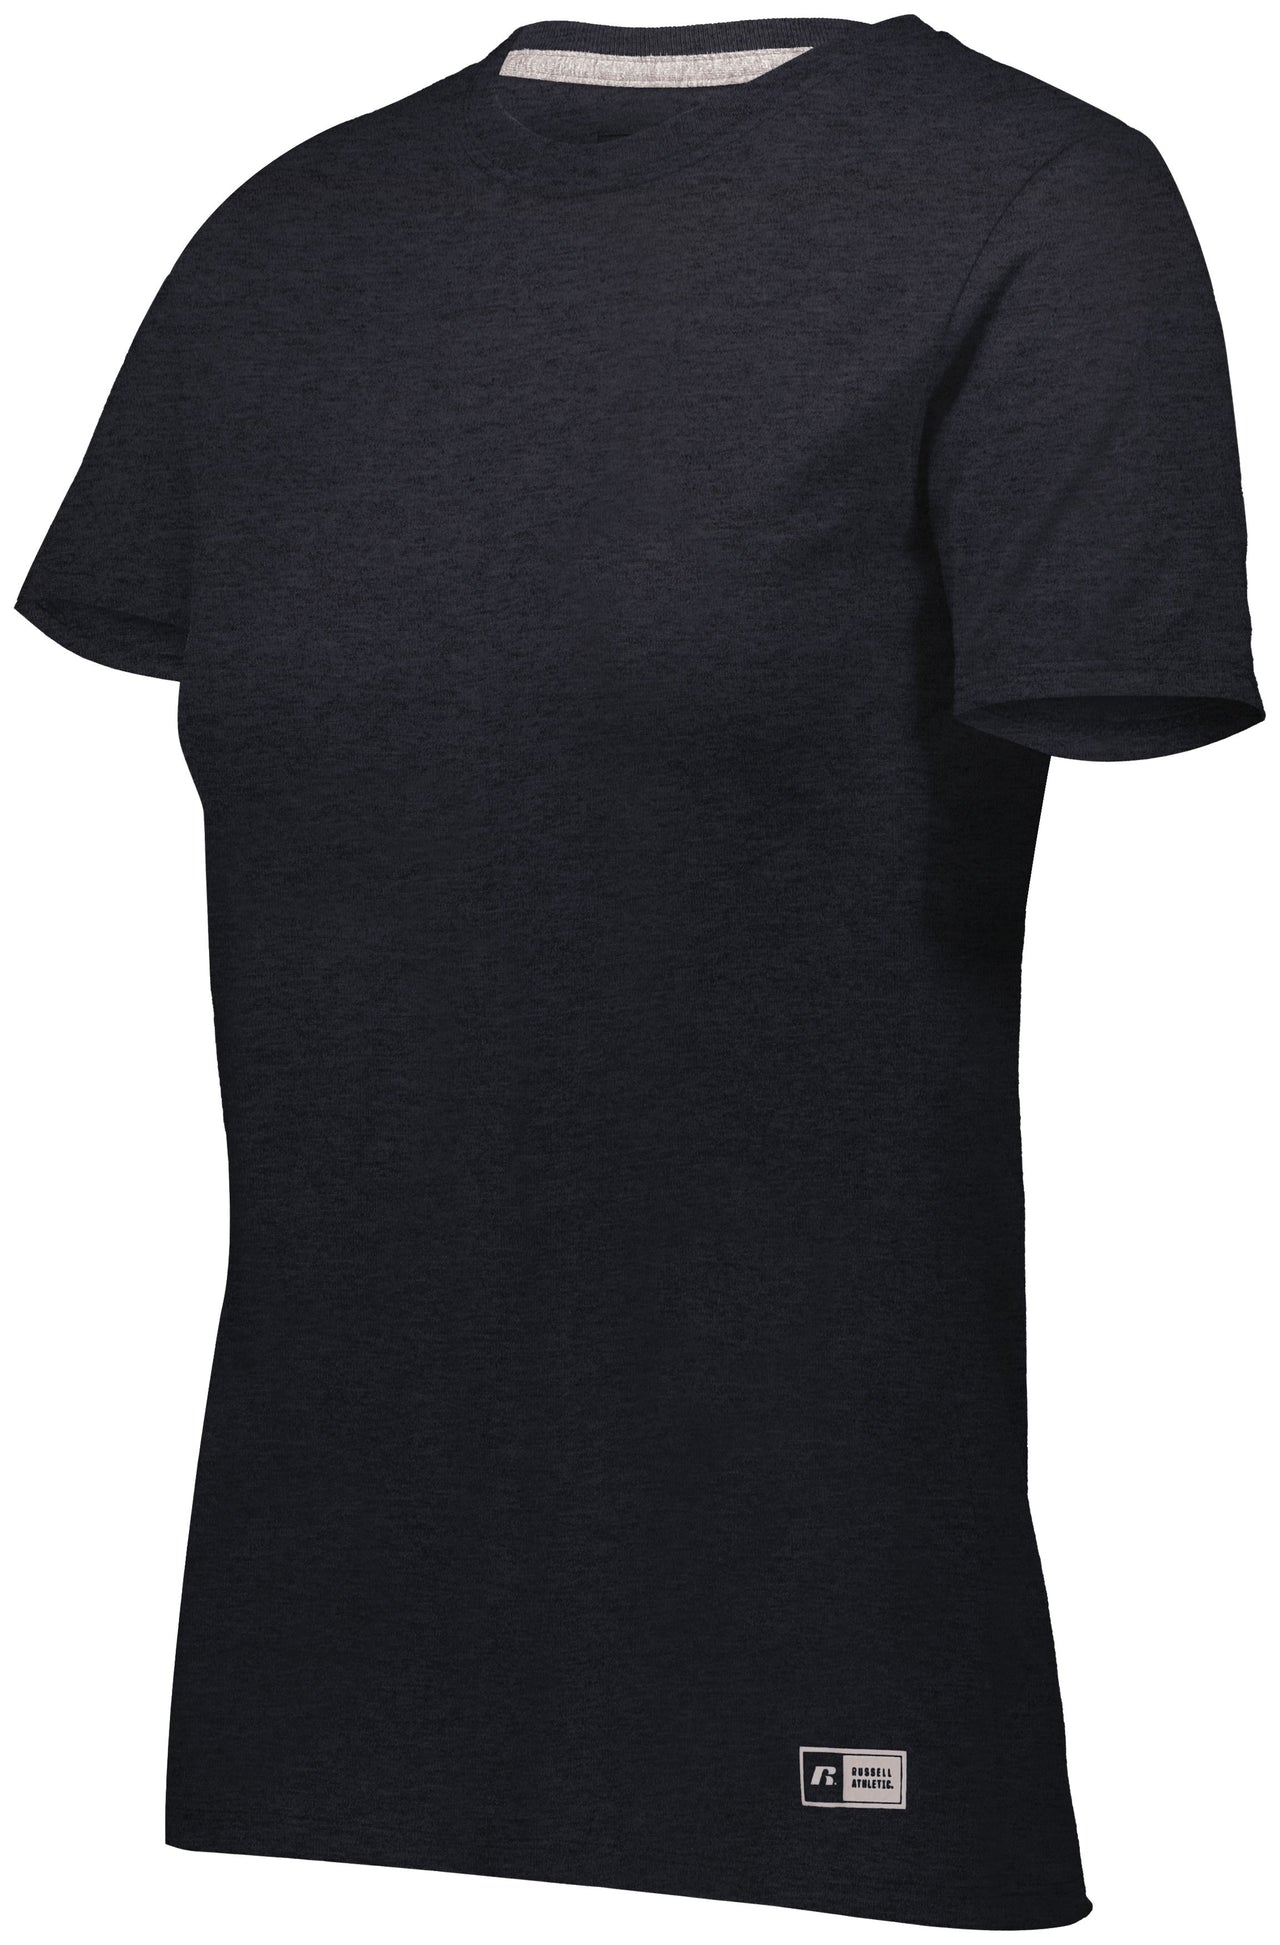 T-shirt essentiel pour femmes - 64STTX